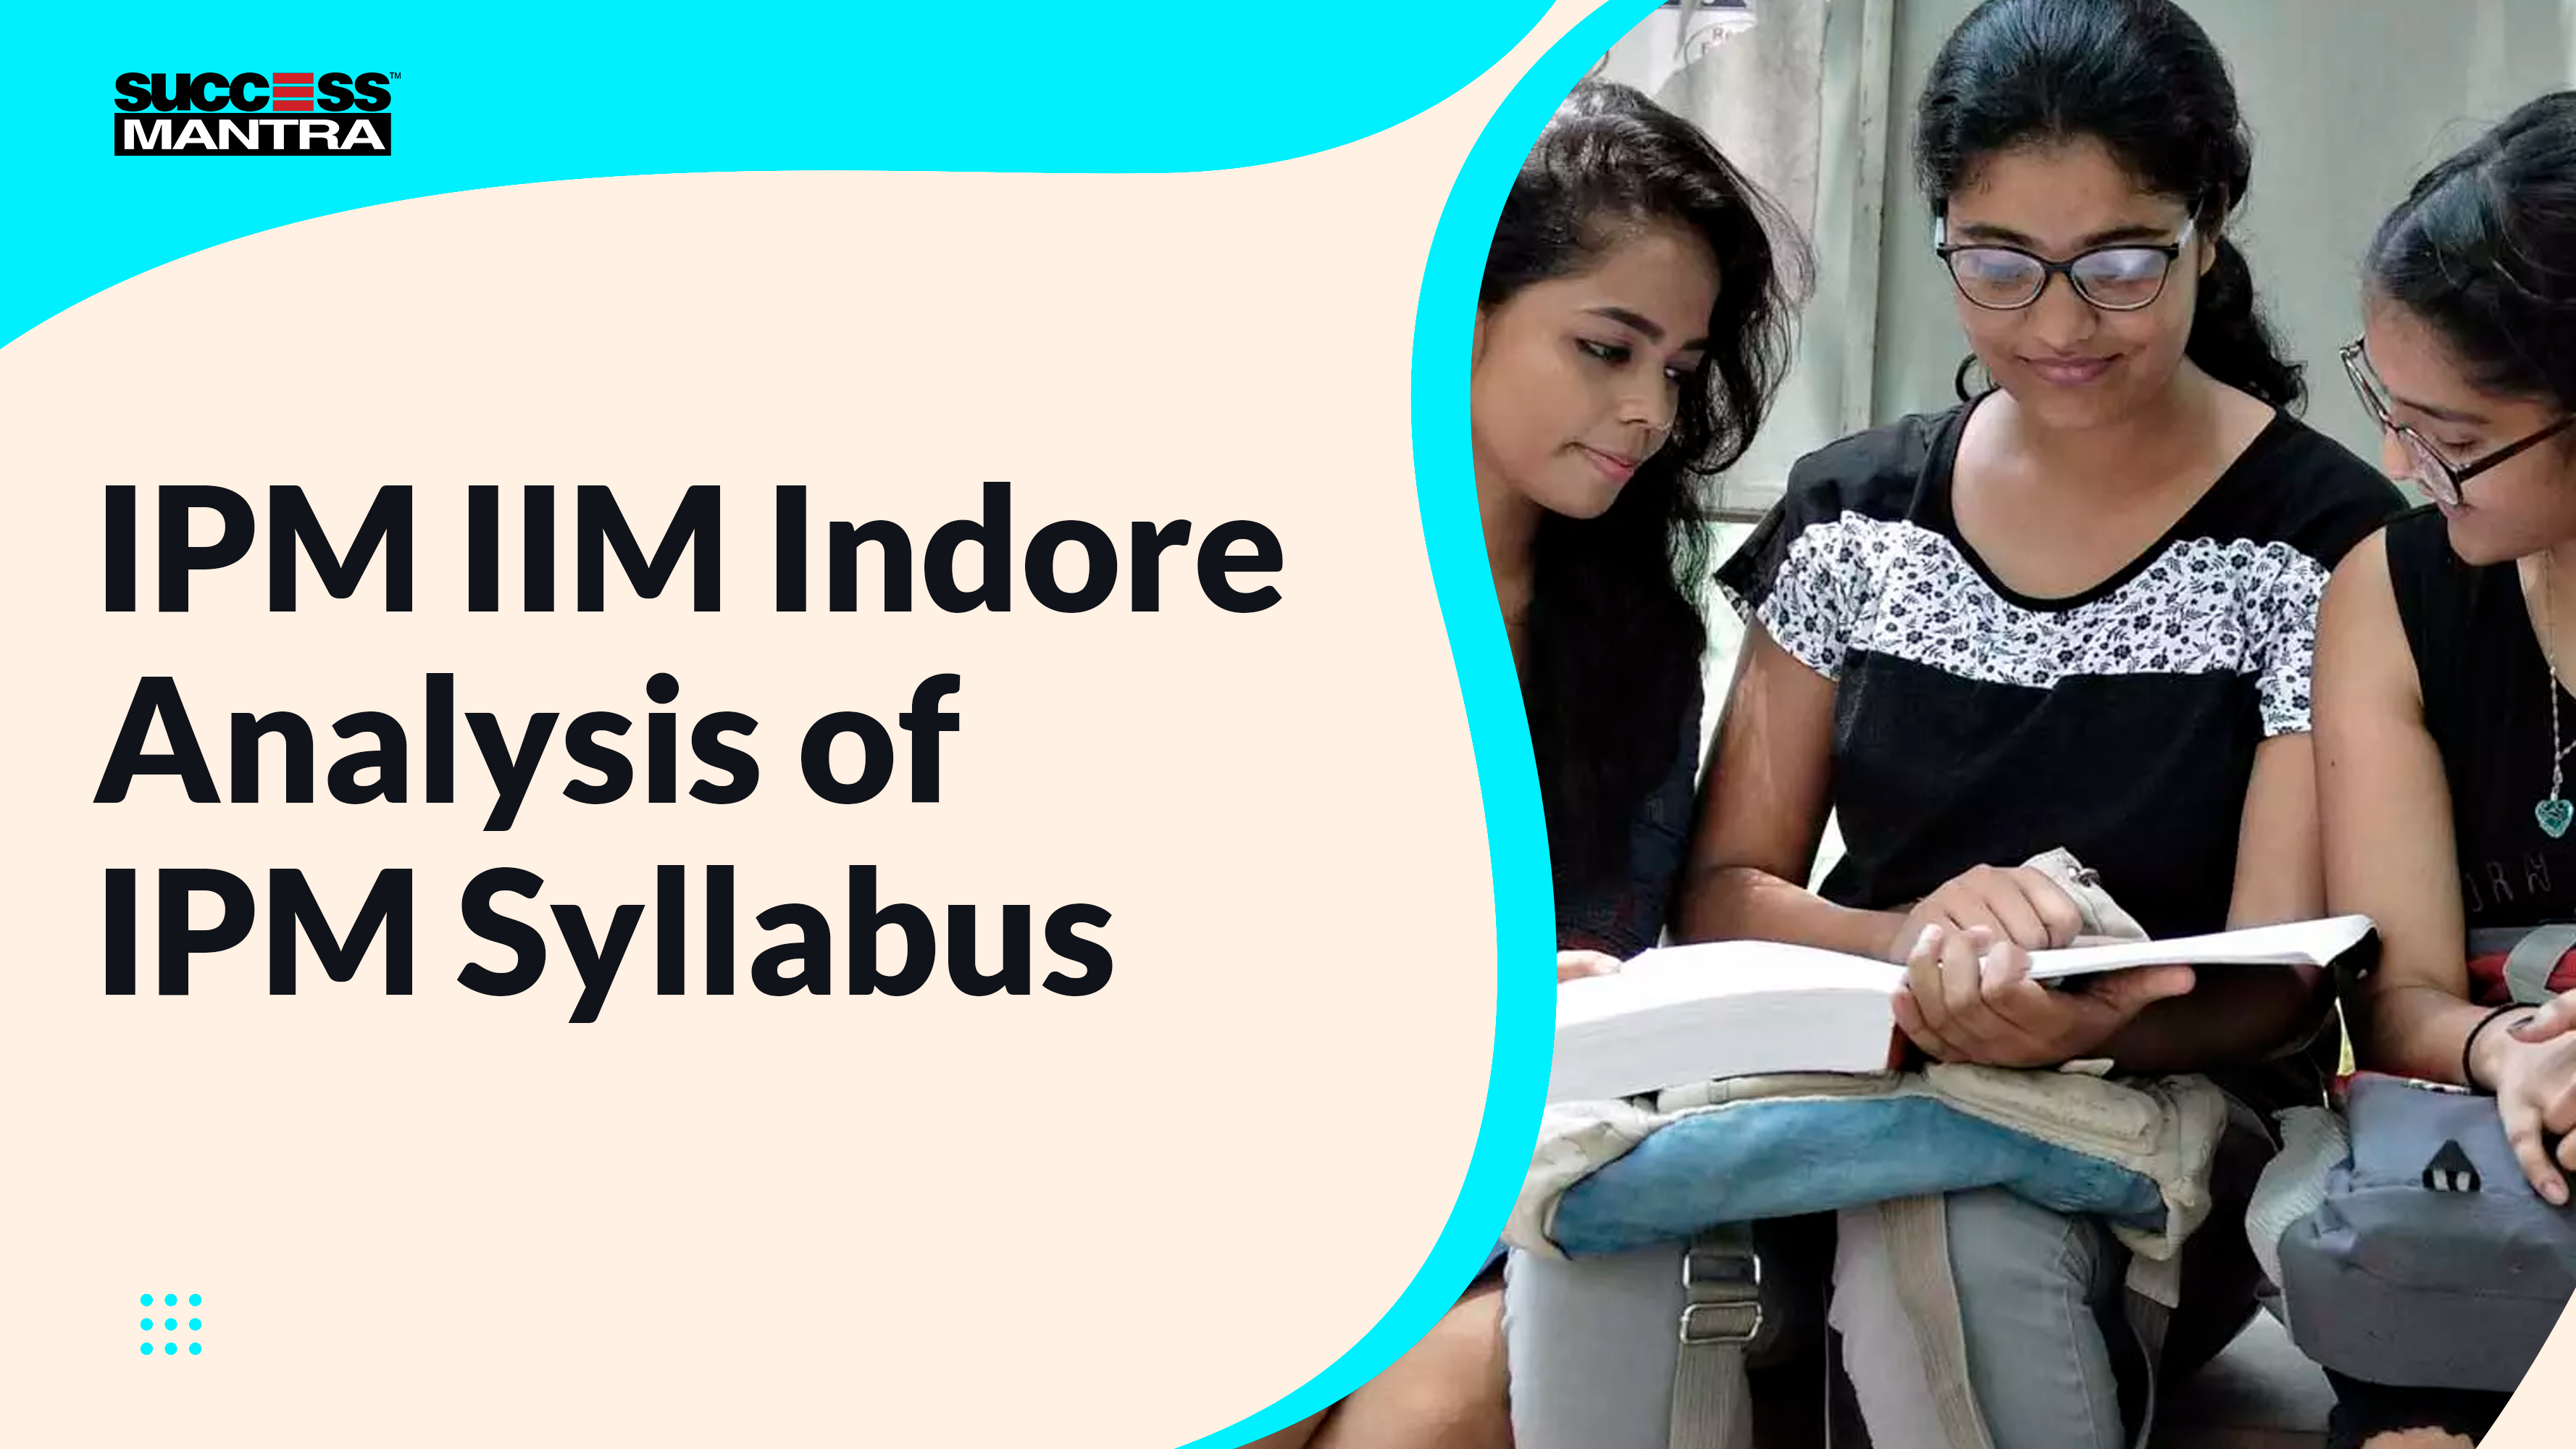 IPM IIM Indore Analysis of IPM Syllabus